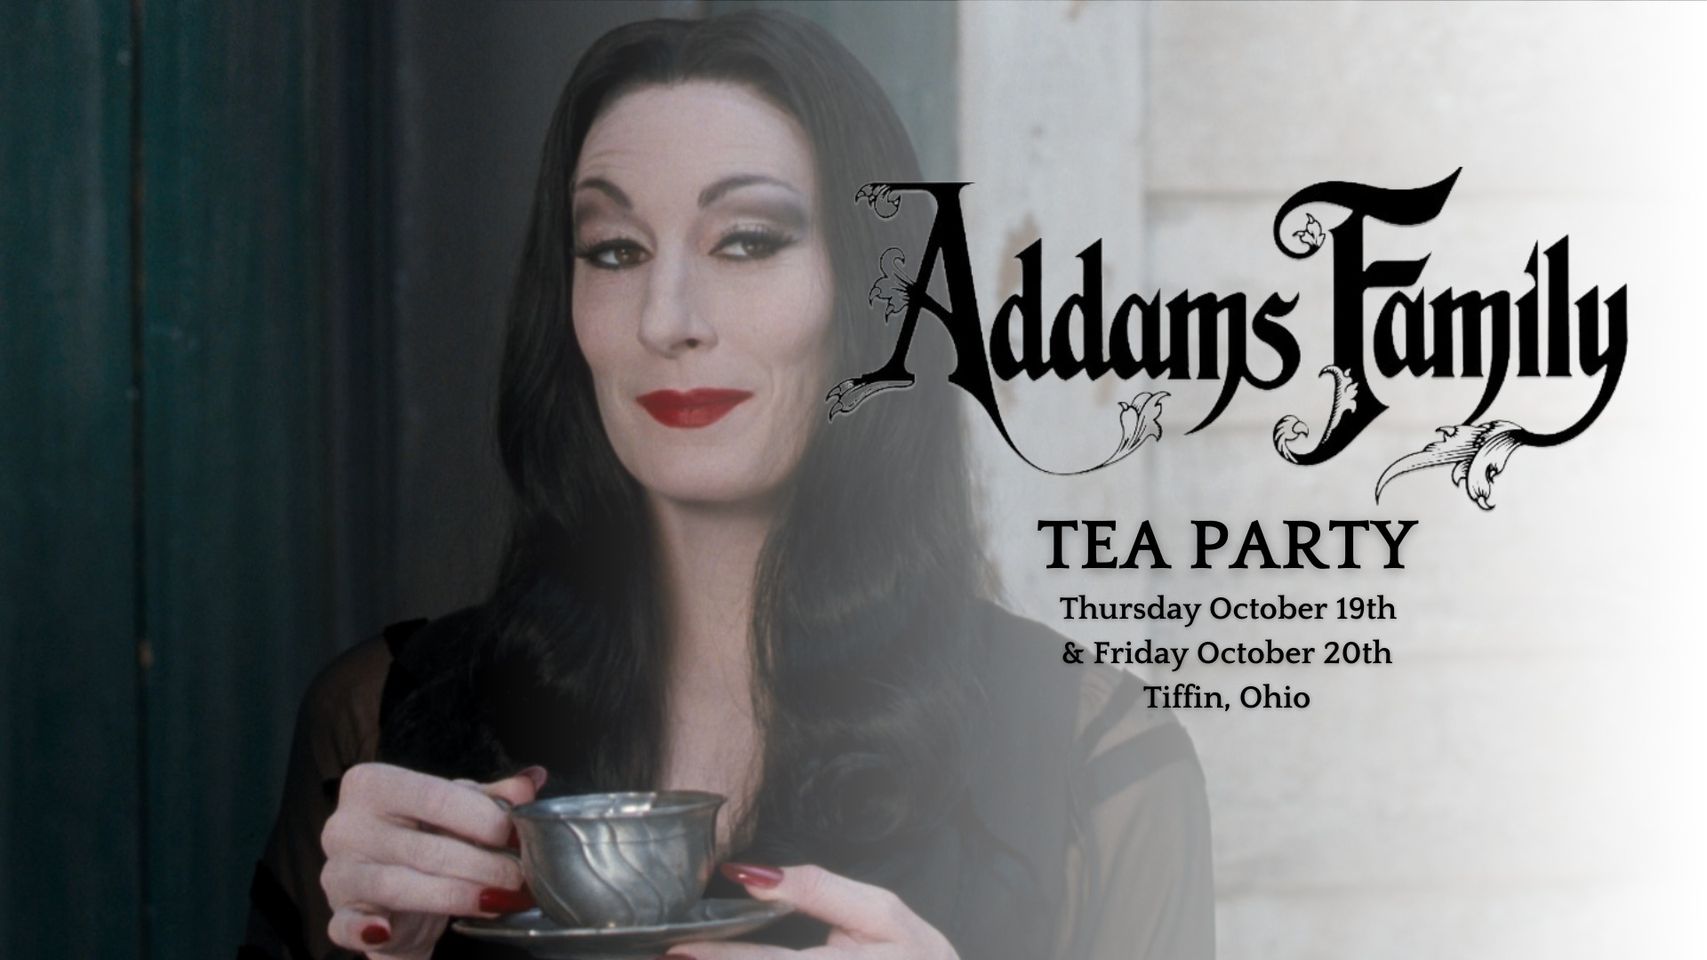 Addams Family Tea Party